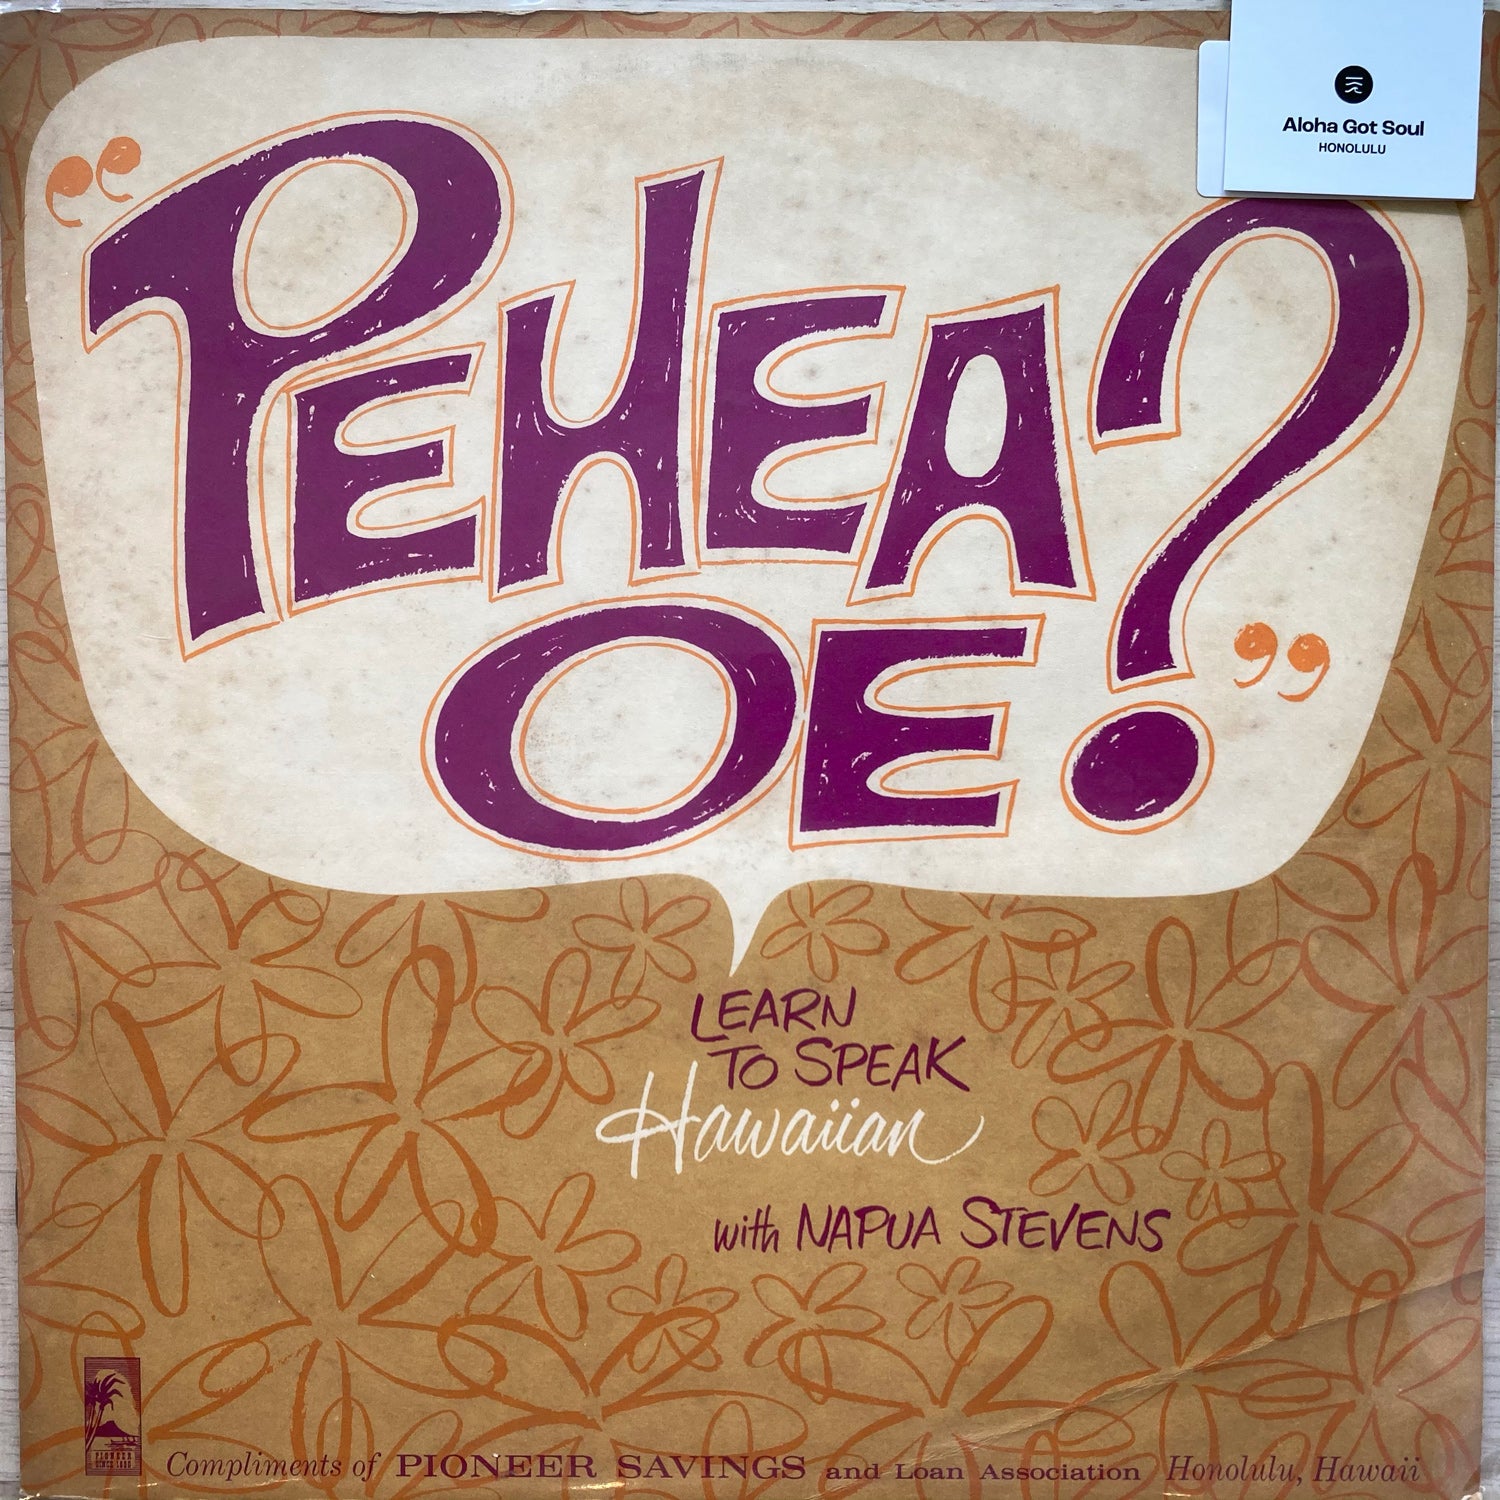 Pehea Oe? - Learn to Speak Hawaiian